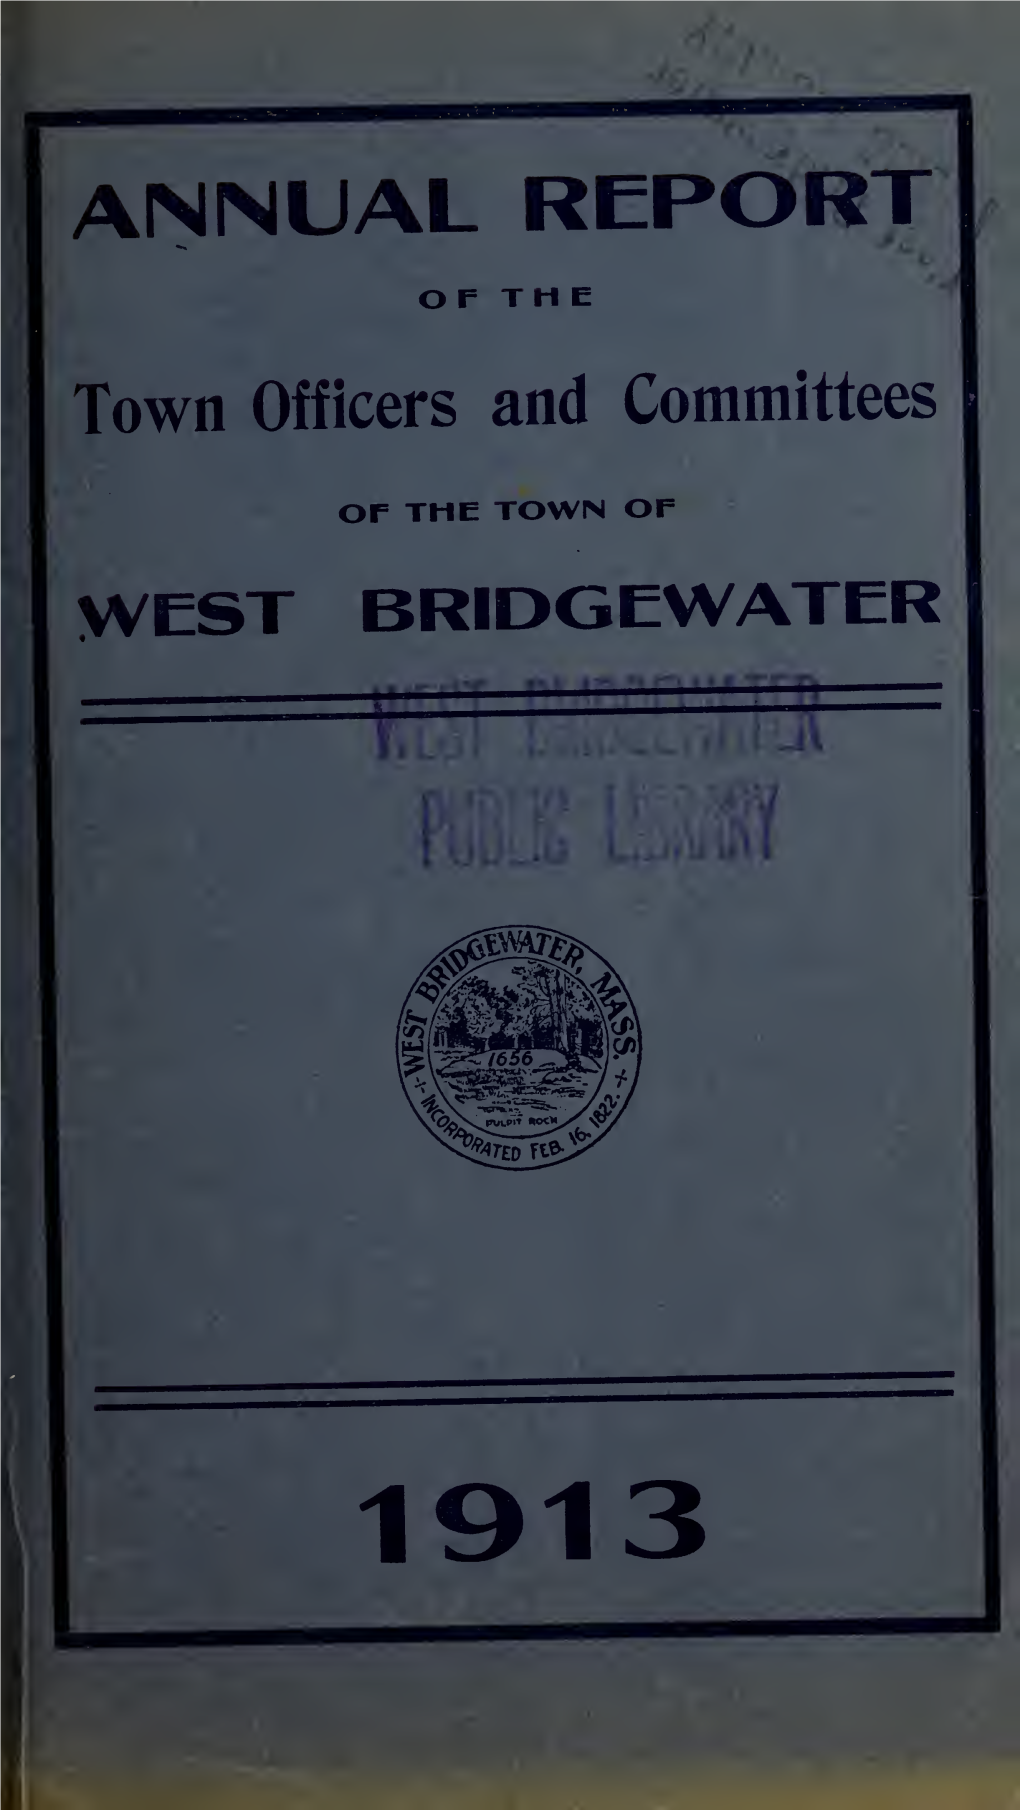 Westbridgewater-1913.Pdf (7.801Mb)